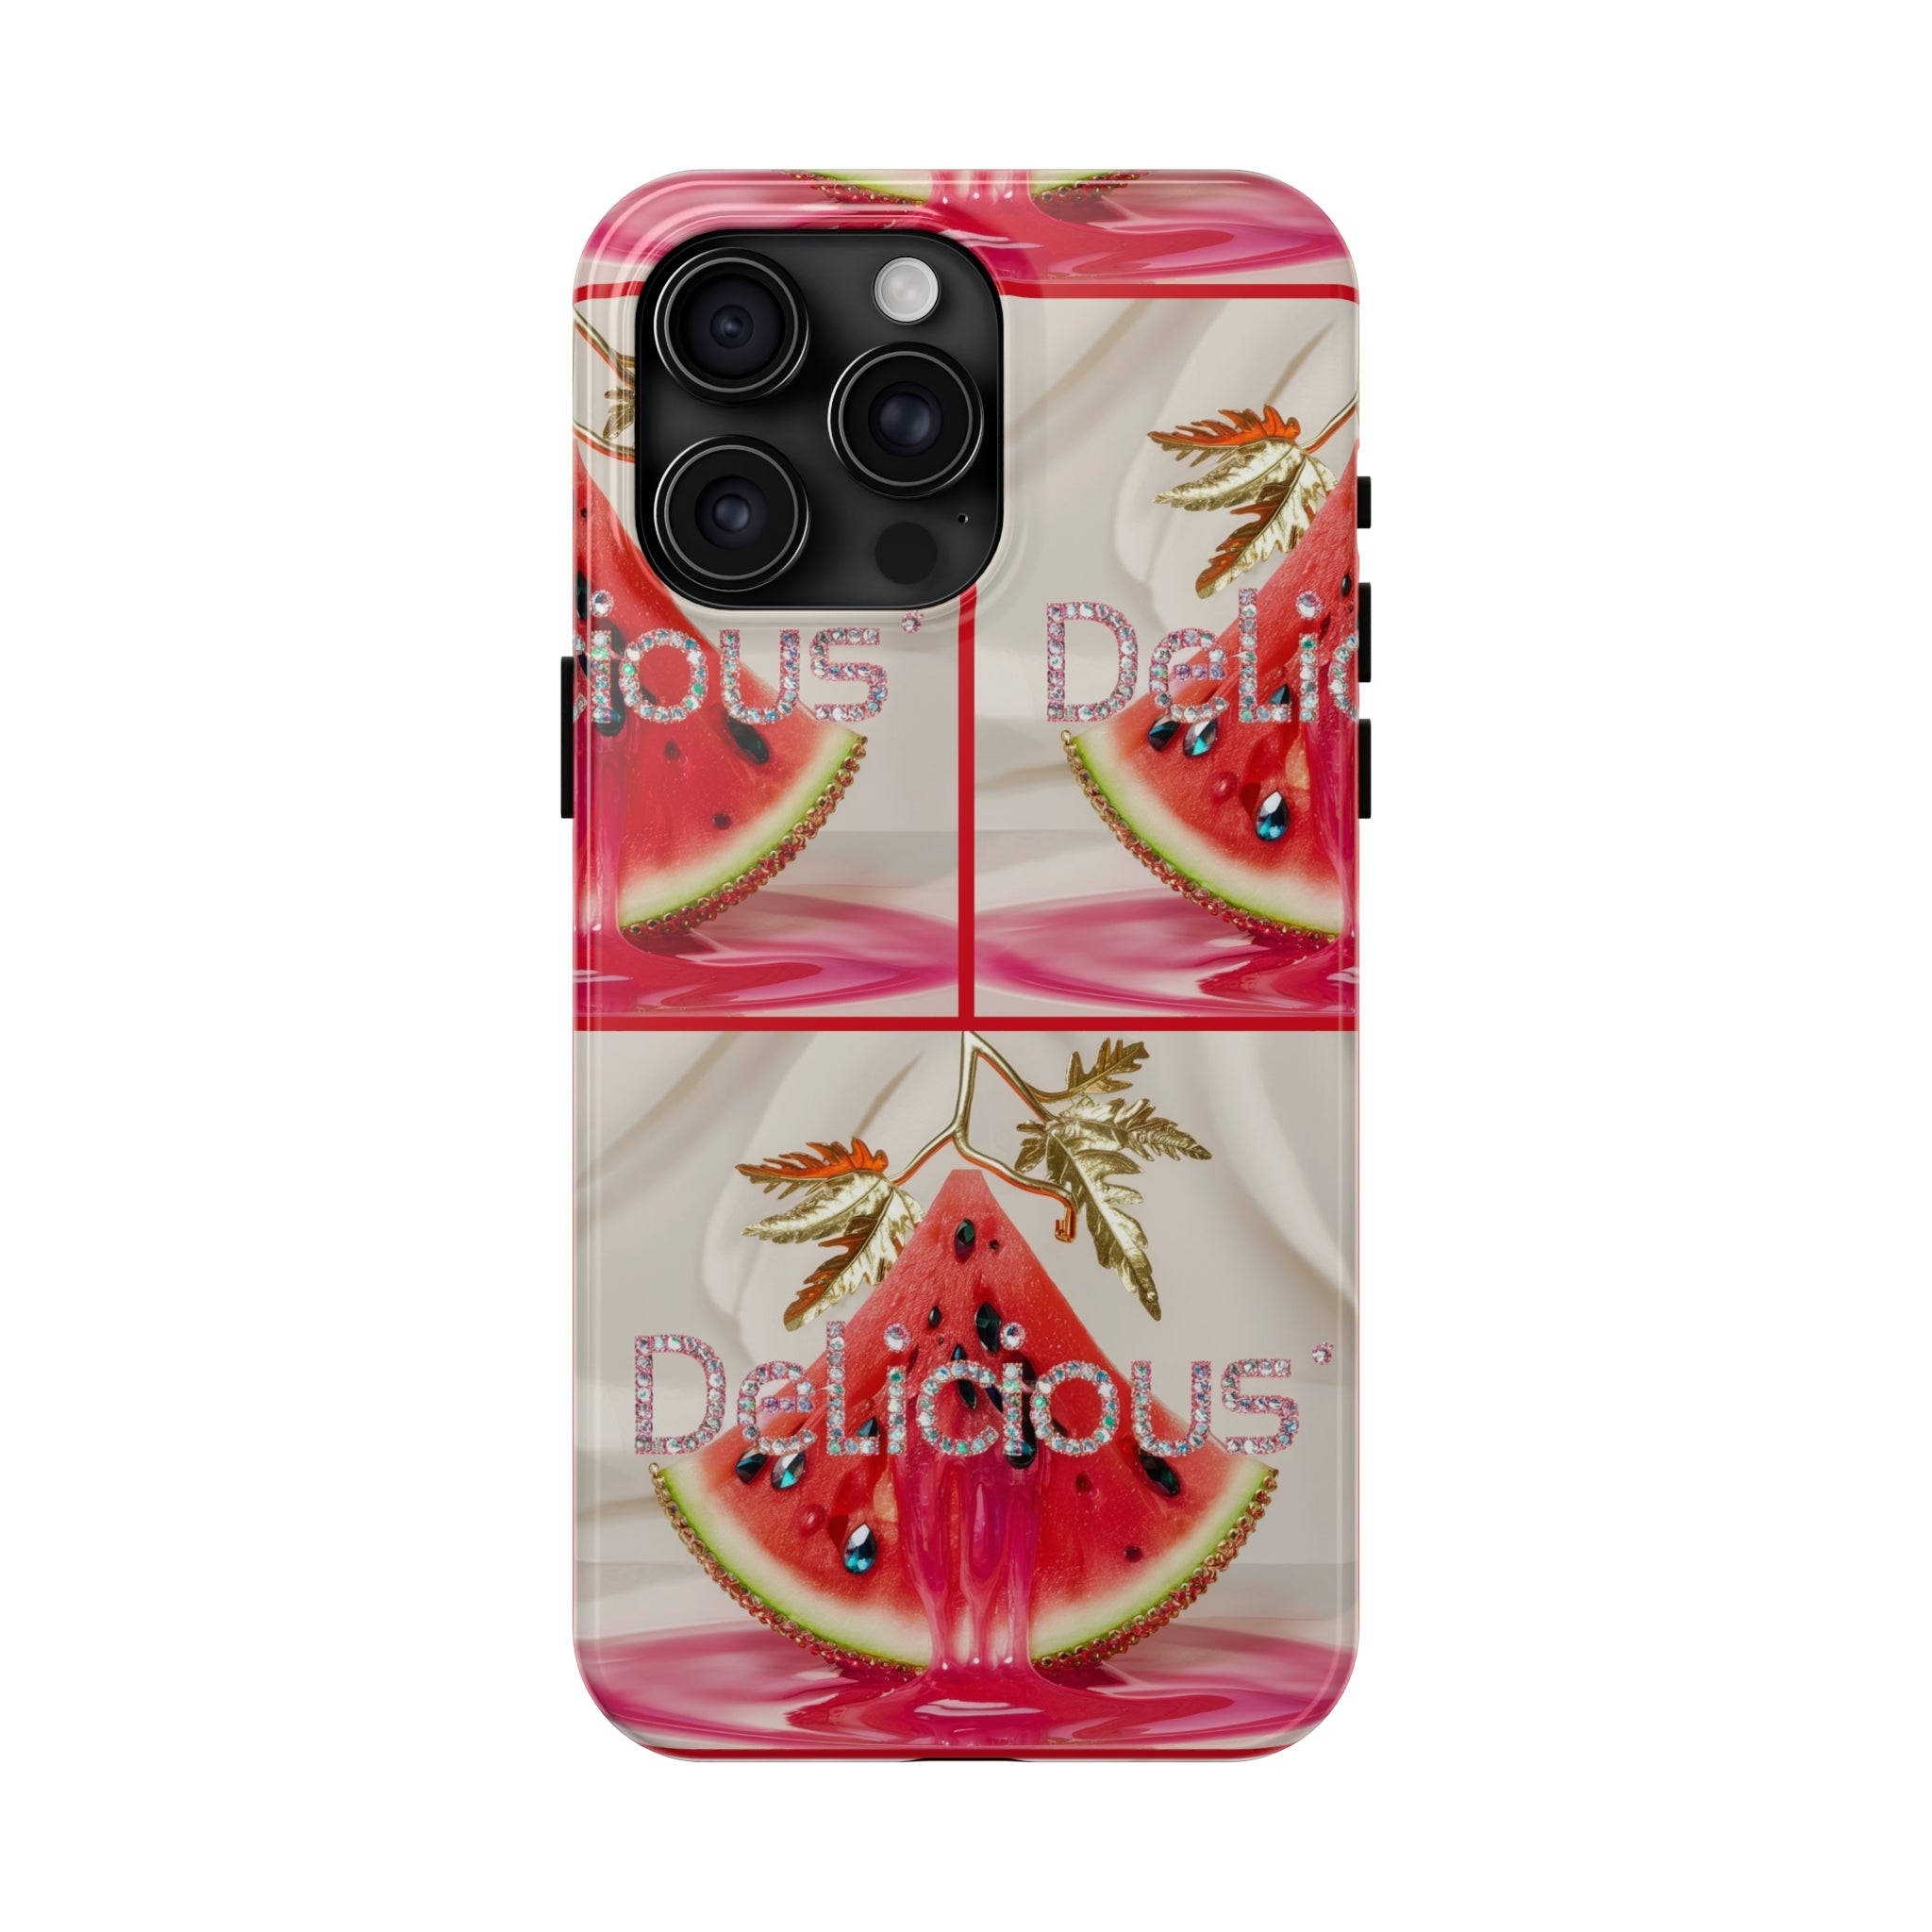 Delicious Watermelon - Tough Phone Cases